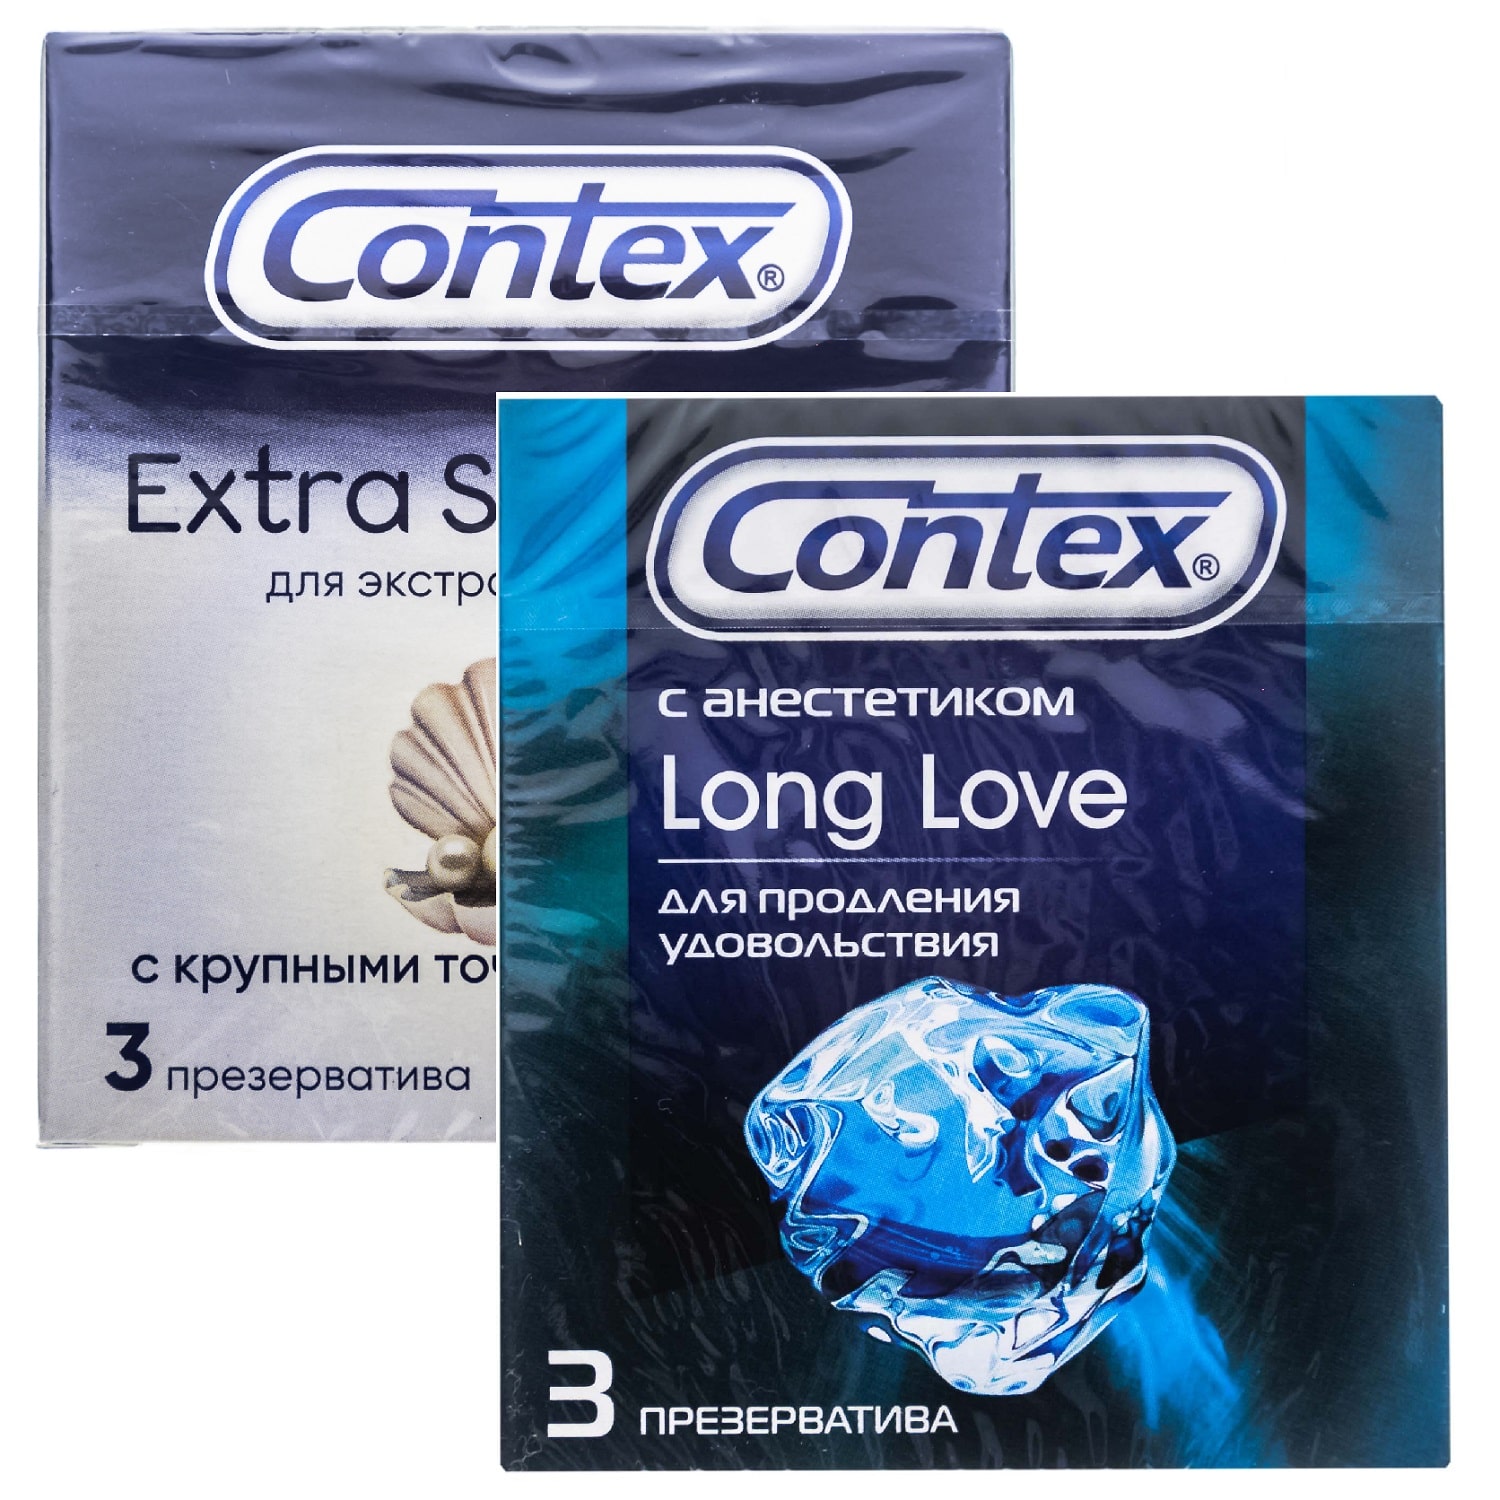 Contex Набор презервативов: Extra Sensation с крупными точками и ребрами №3 + Long Love с анестетиком №3 (Contex, Презервативы)